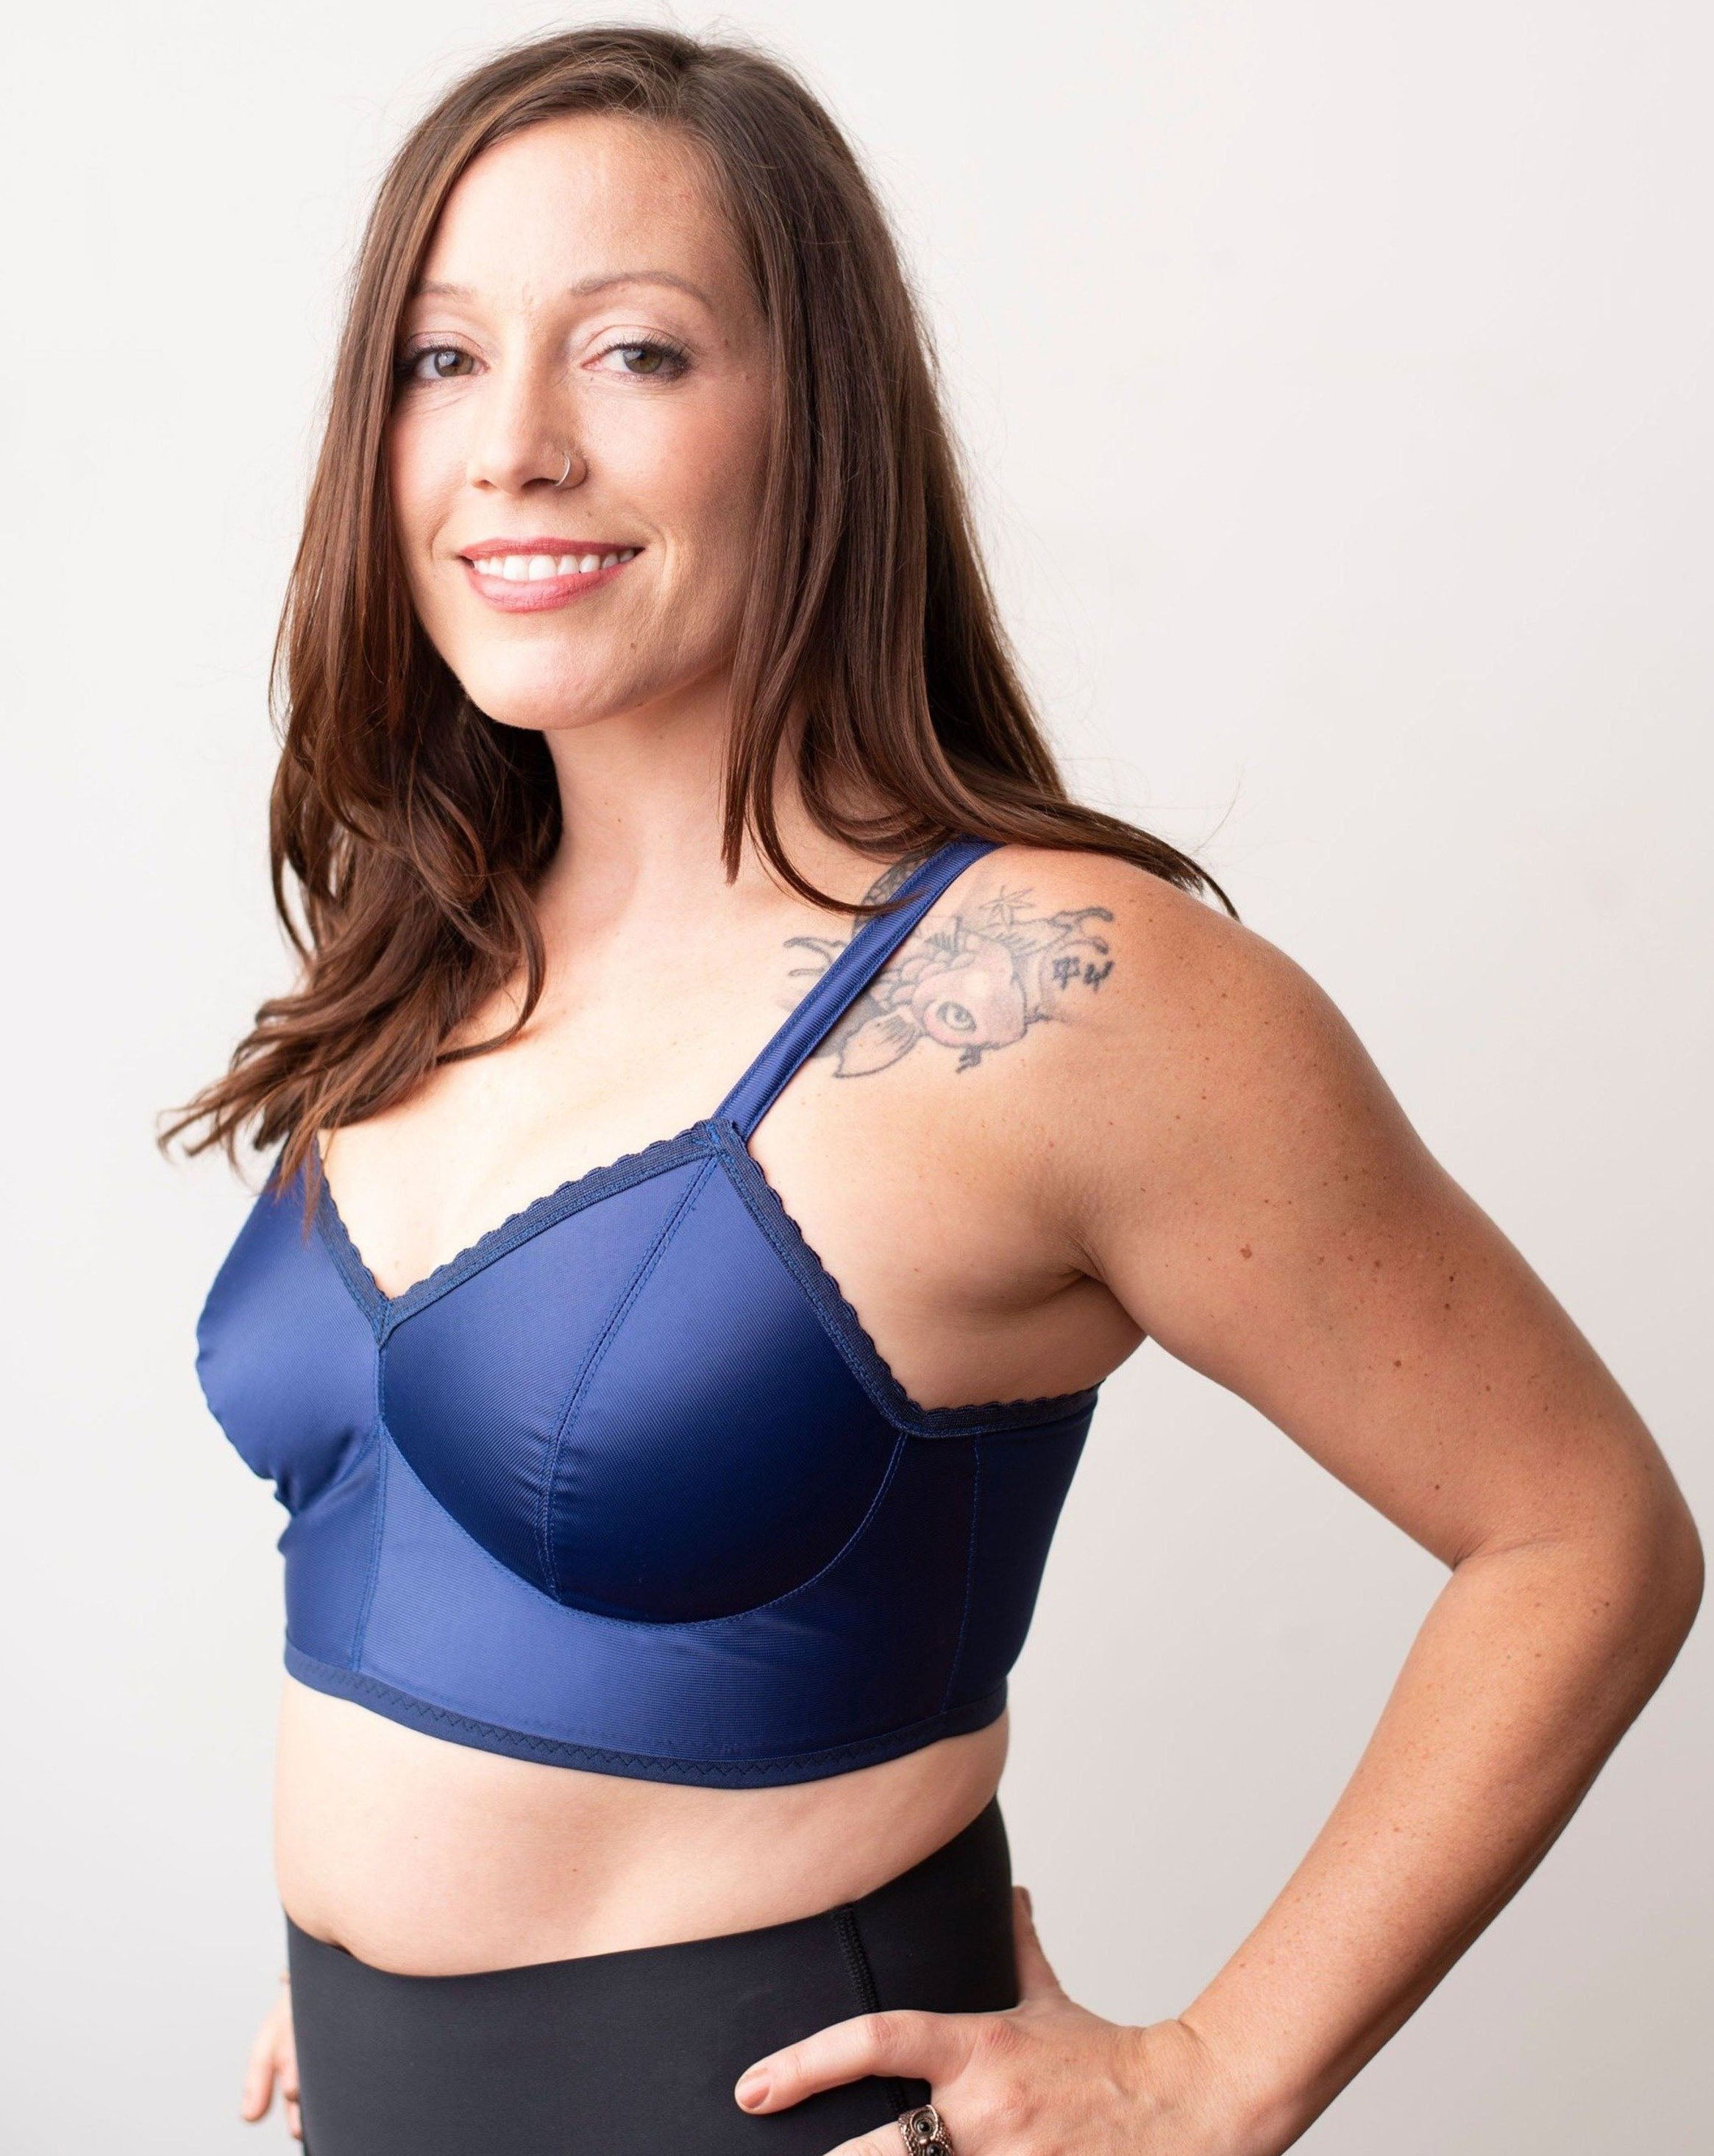 Brown hair model wearing a navy blue solid bra.